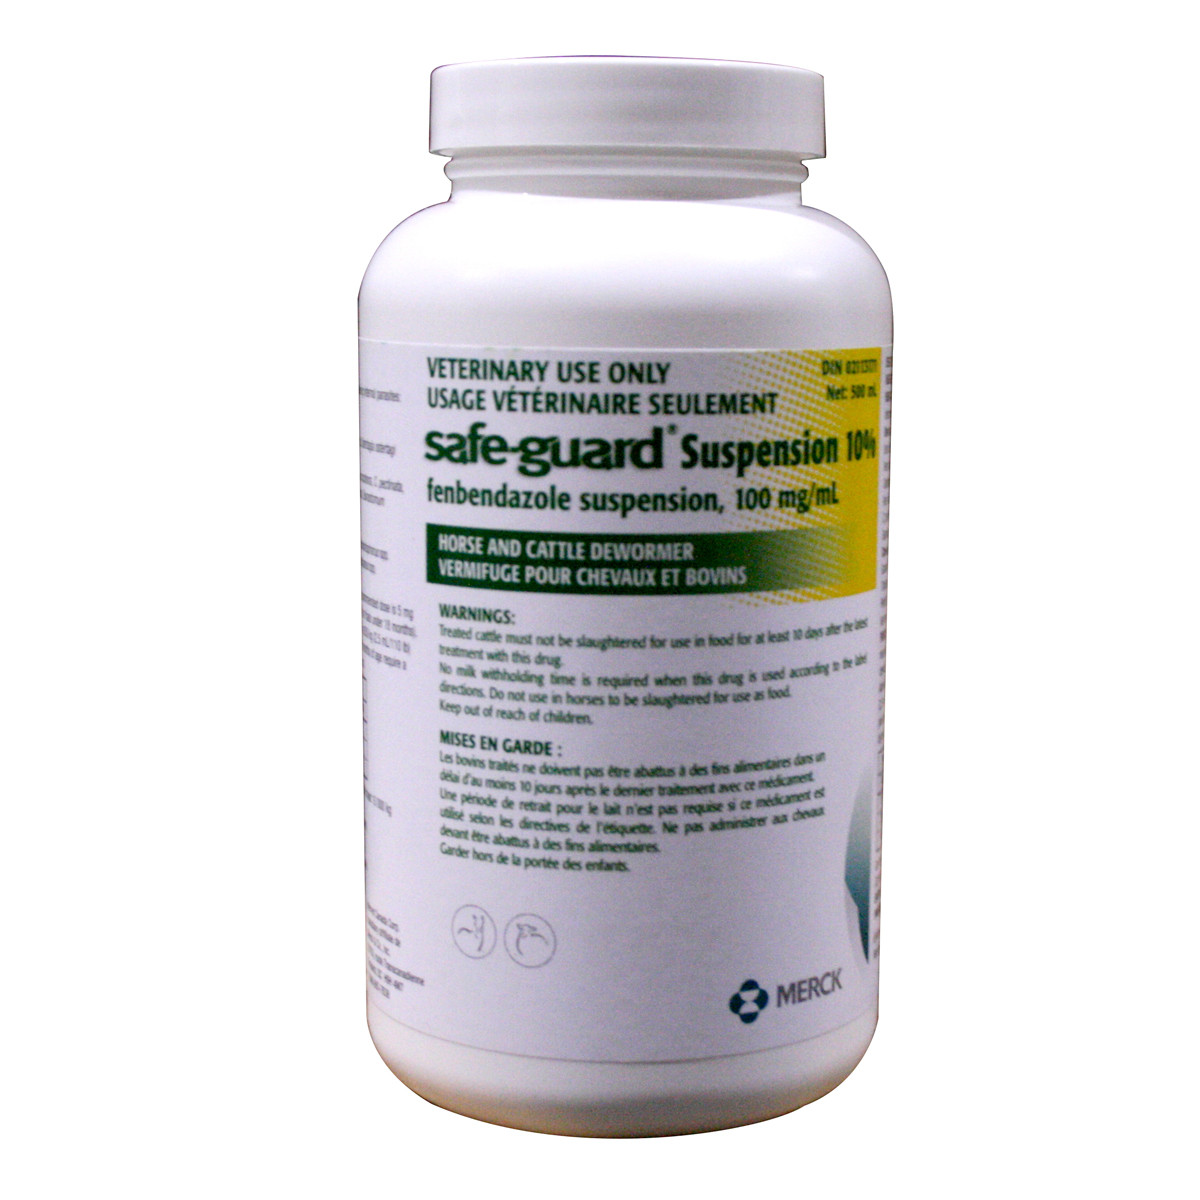 Safe Guard Suspension 10% Cattle Dewormer - 500 ml